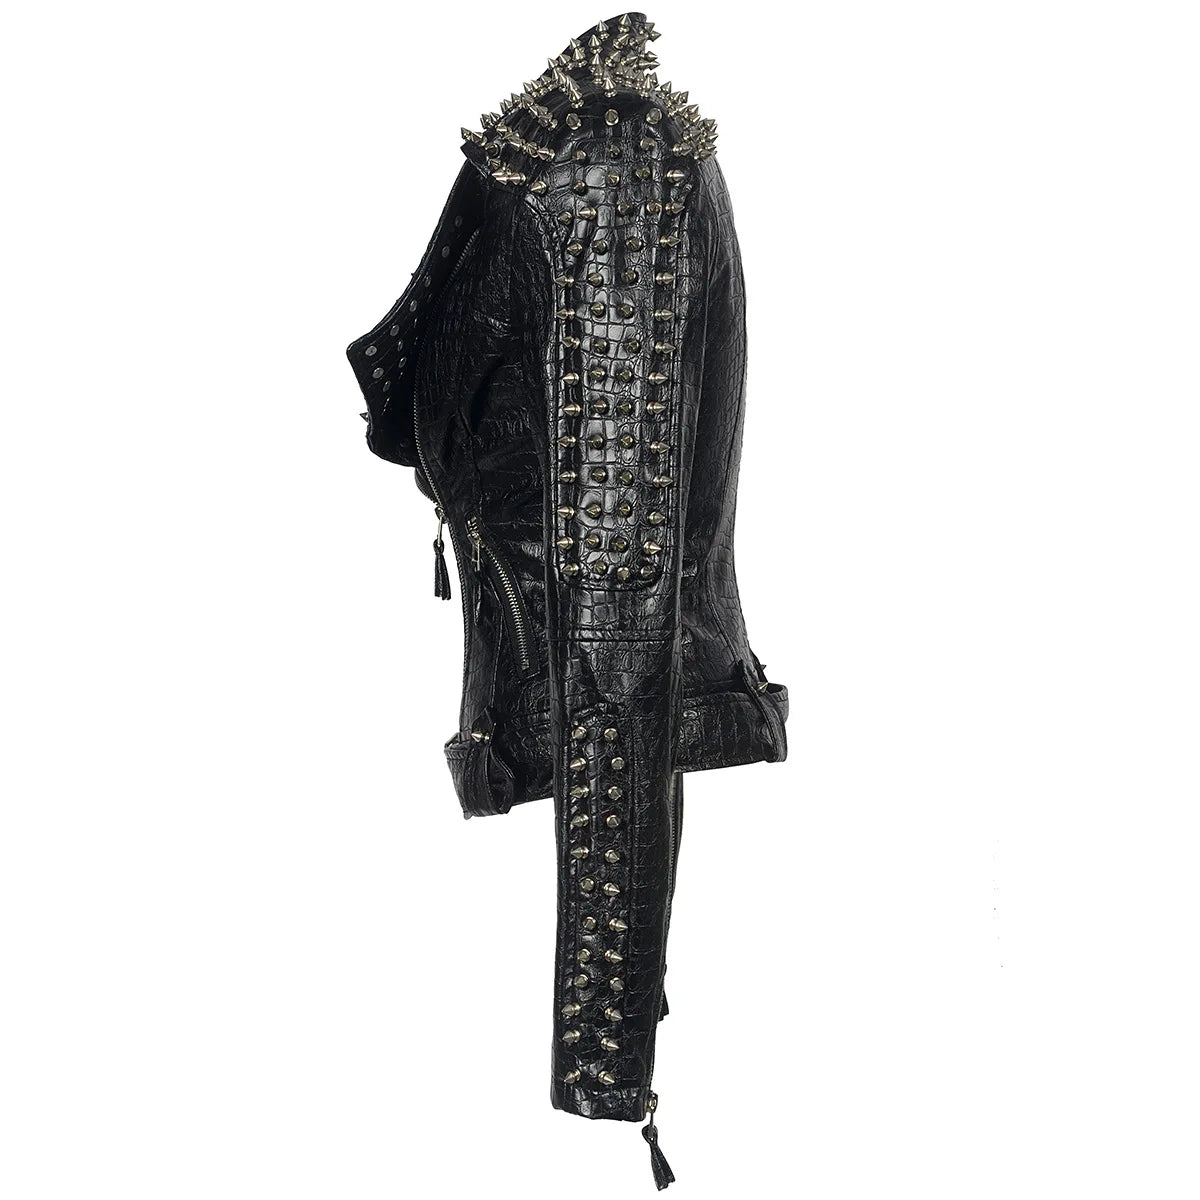 FZ Women's Steampunk Rock Rivet Slim Gothic Embroidery PU Leather Jacket